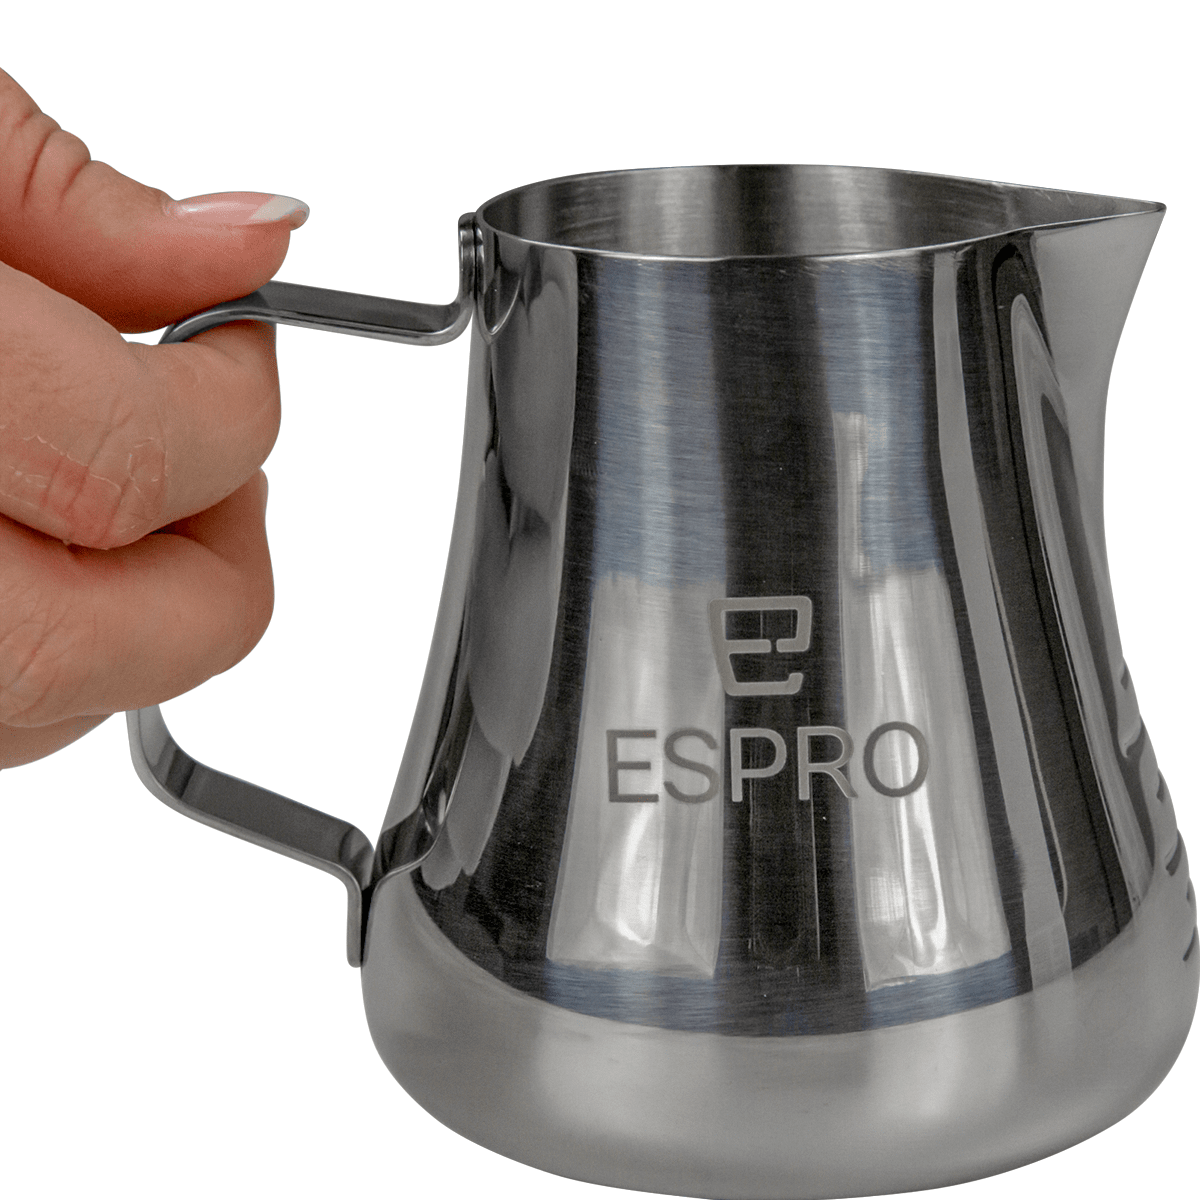 Espro Toroid 2 Steaming Pitcher - 12 oz